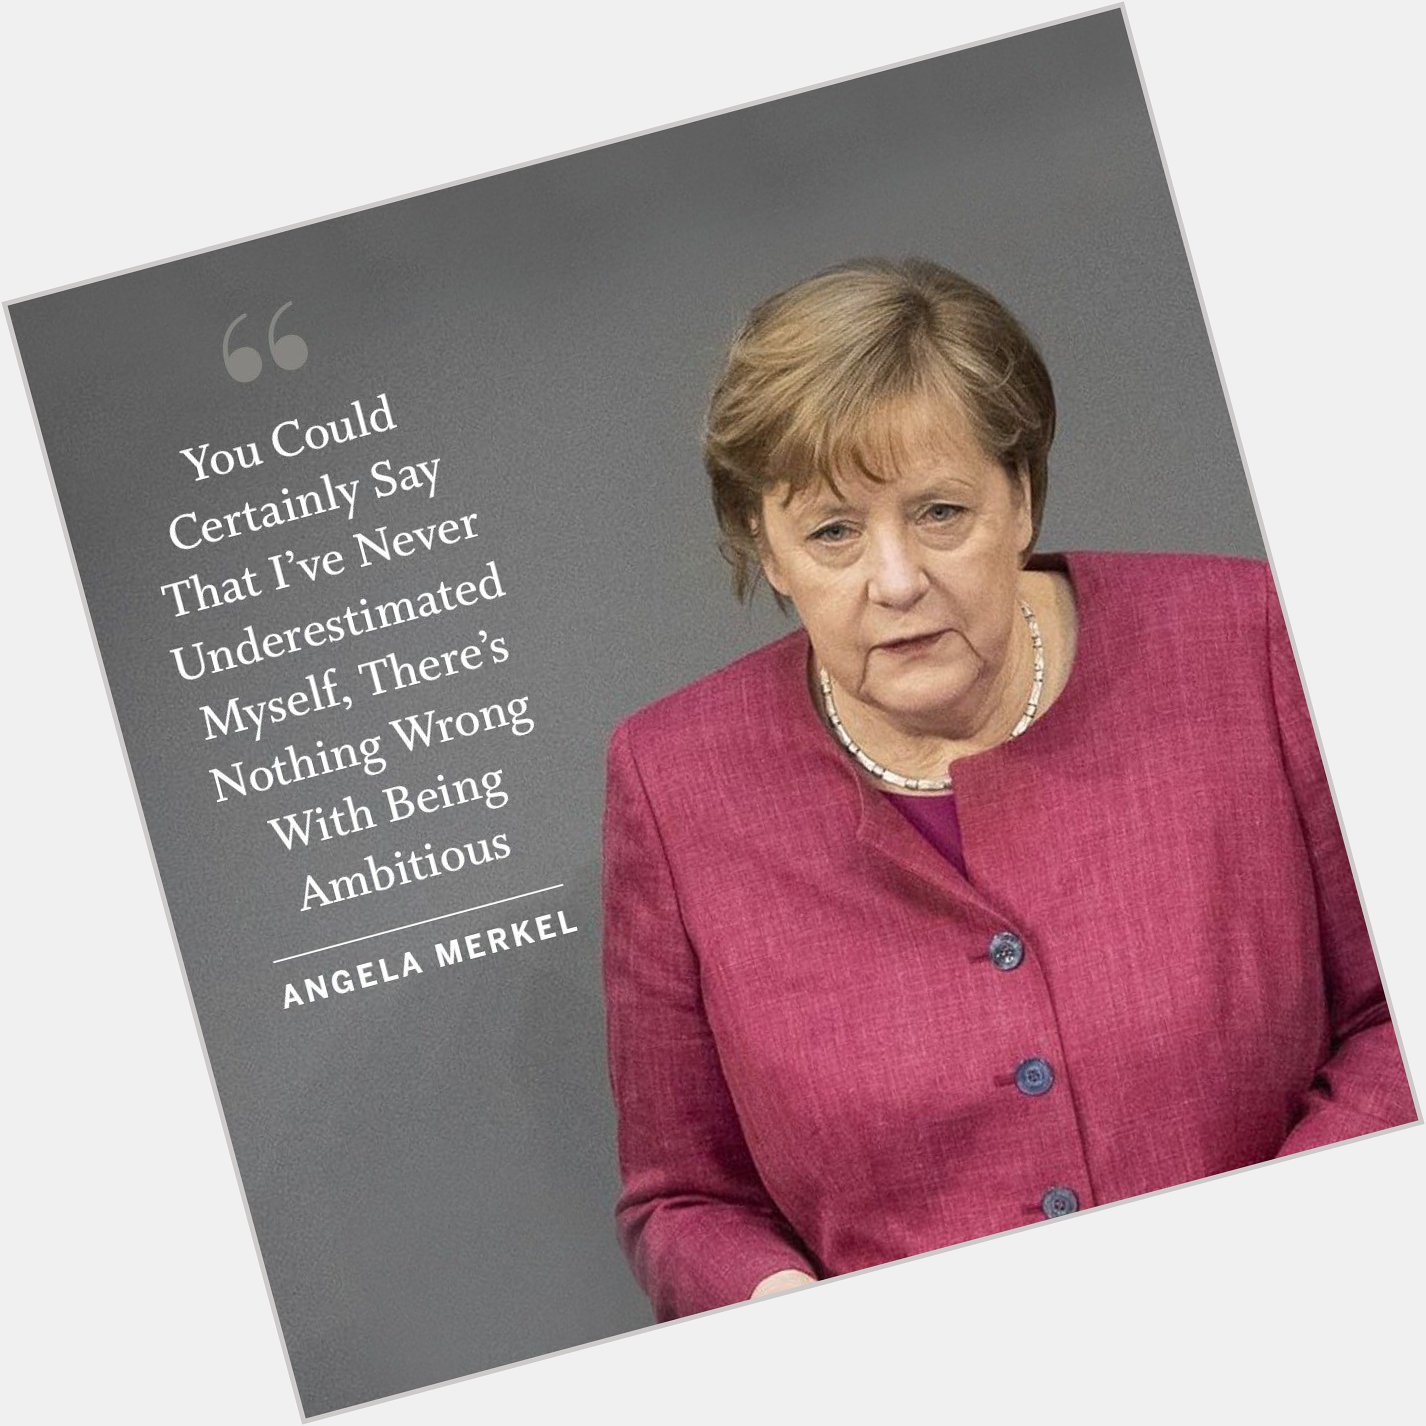      Wishing Angela Merkel a very happy birthday! ...  